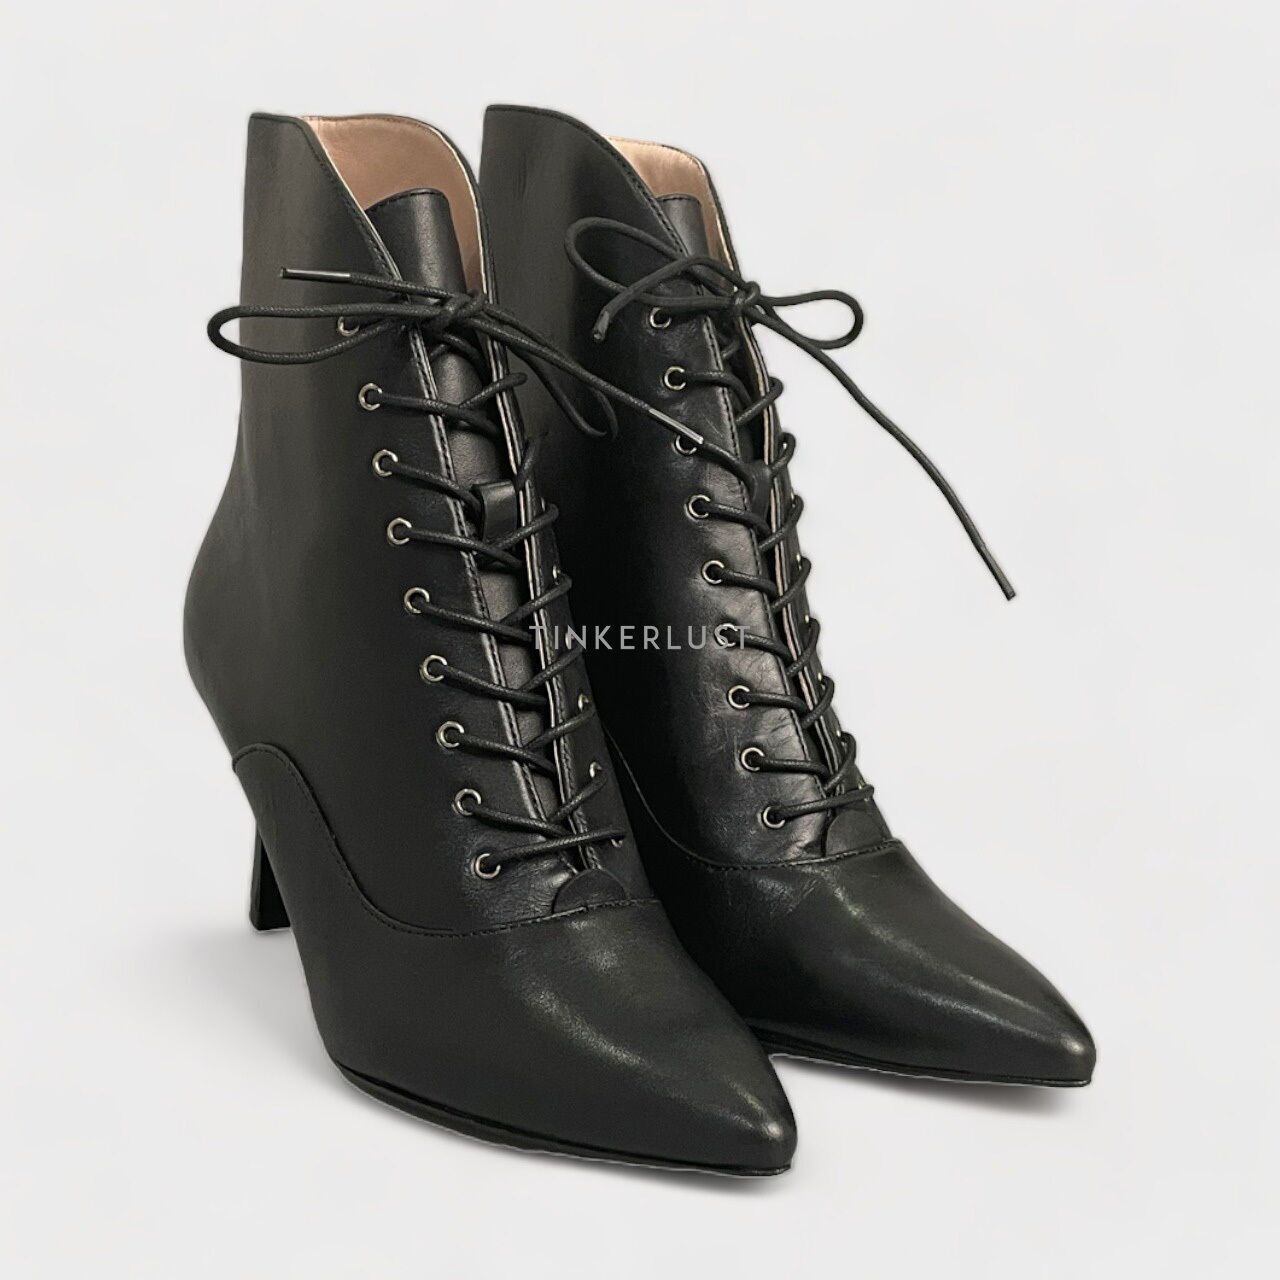 Nine West Black Ankle Boots